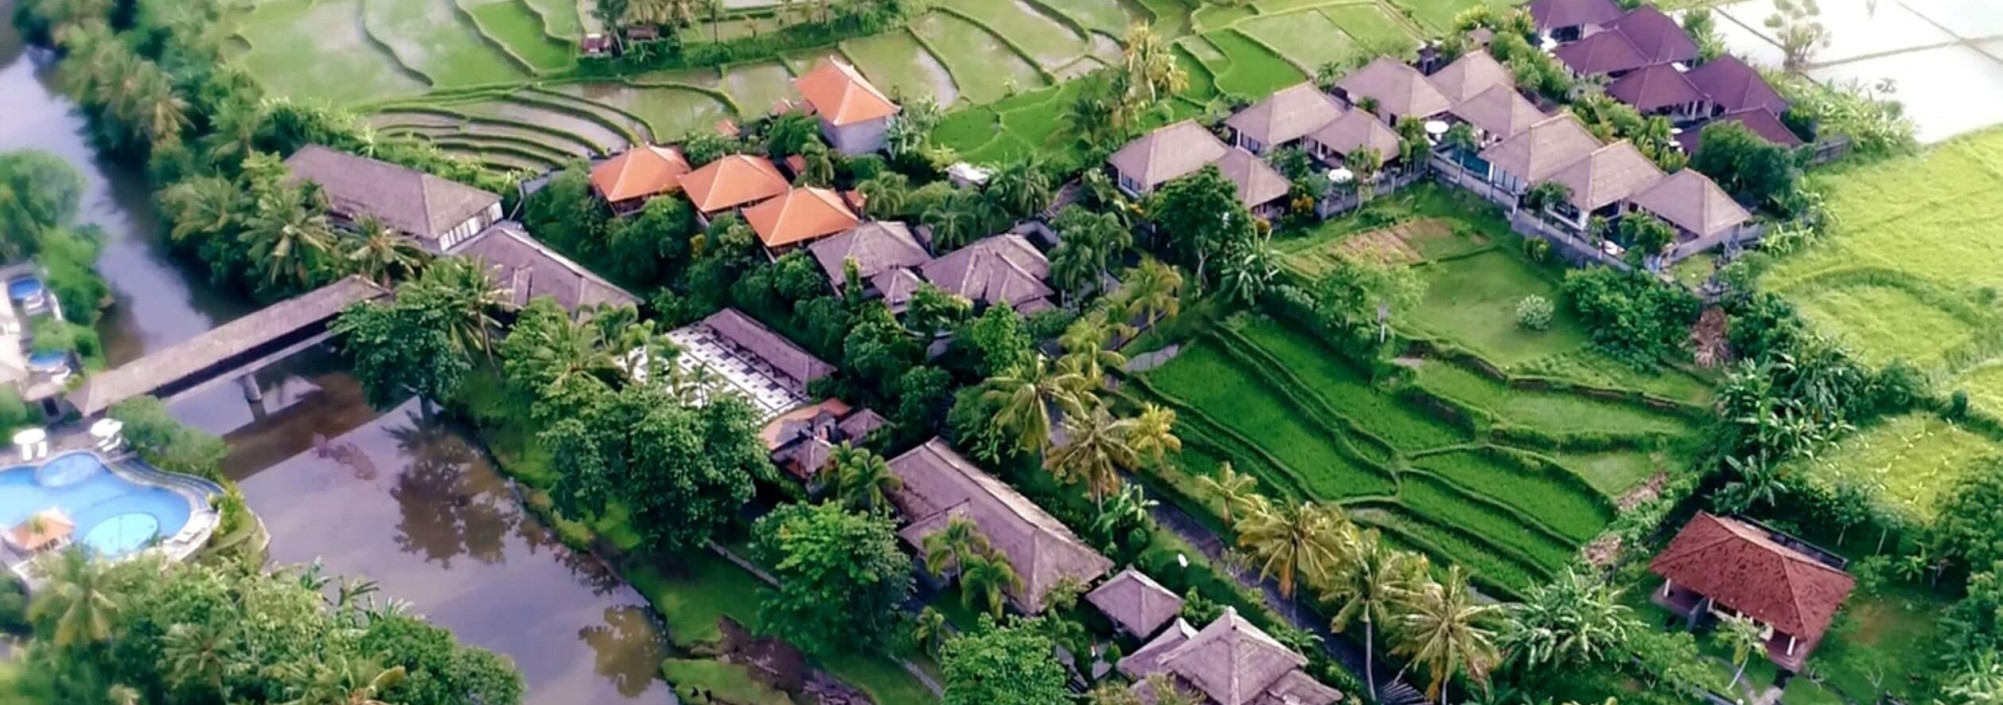 Santi Mandala Villa & Spa - Hotels in Ubud - Bali Travel